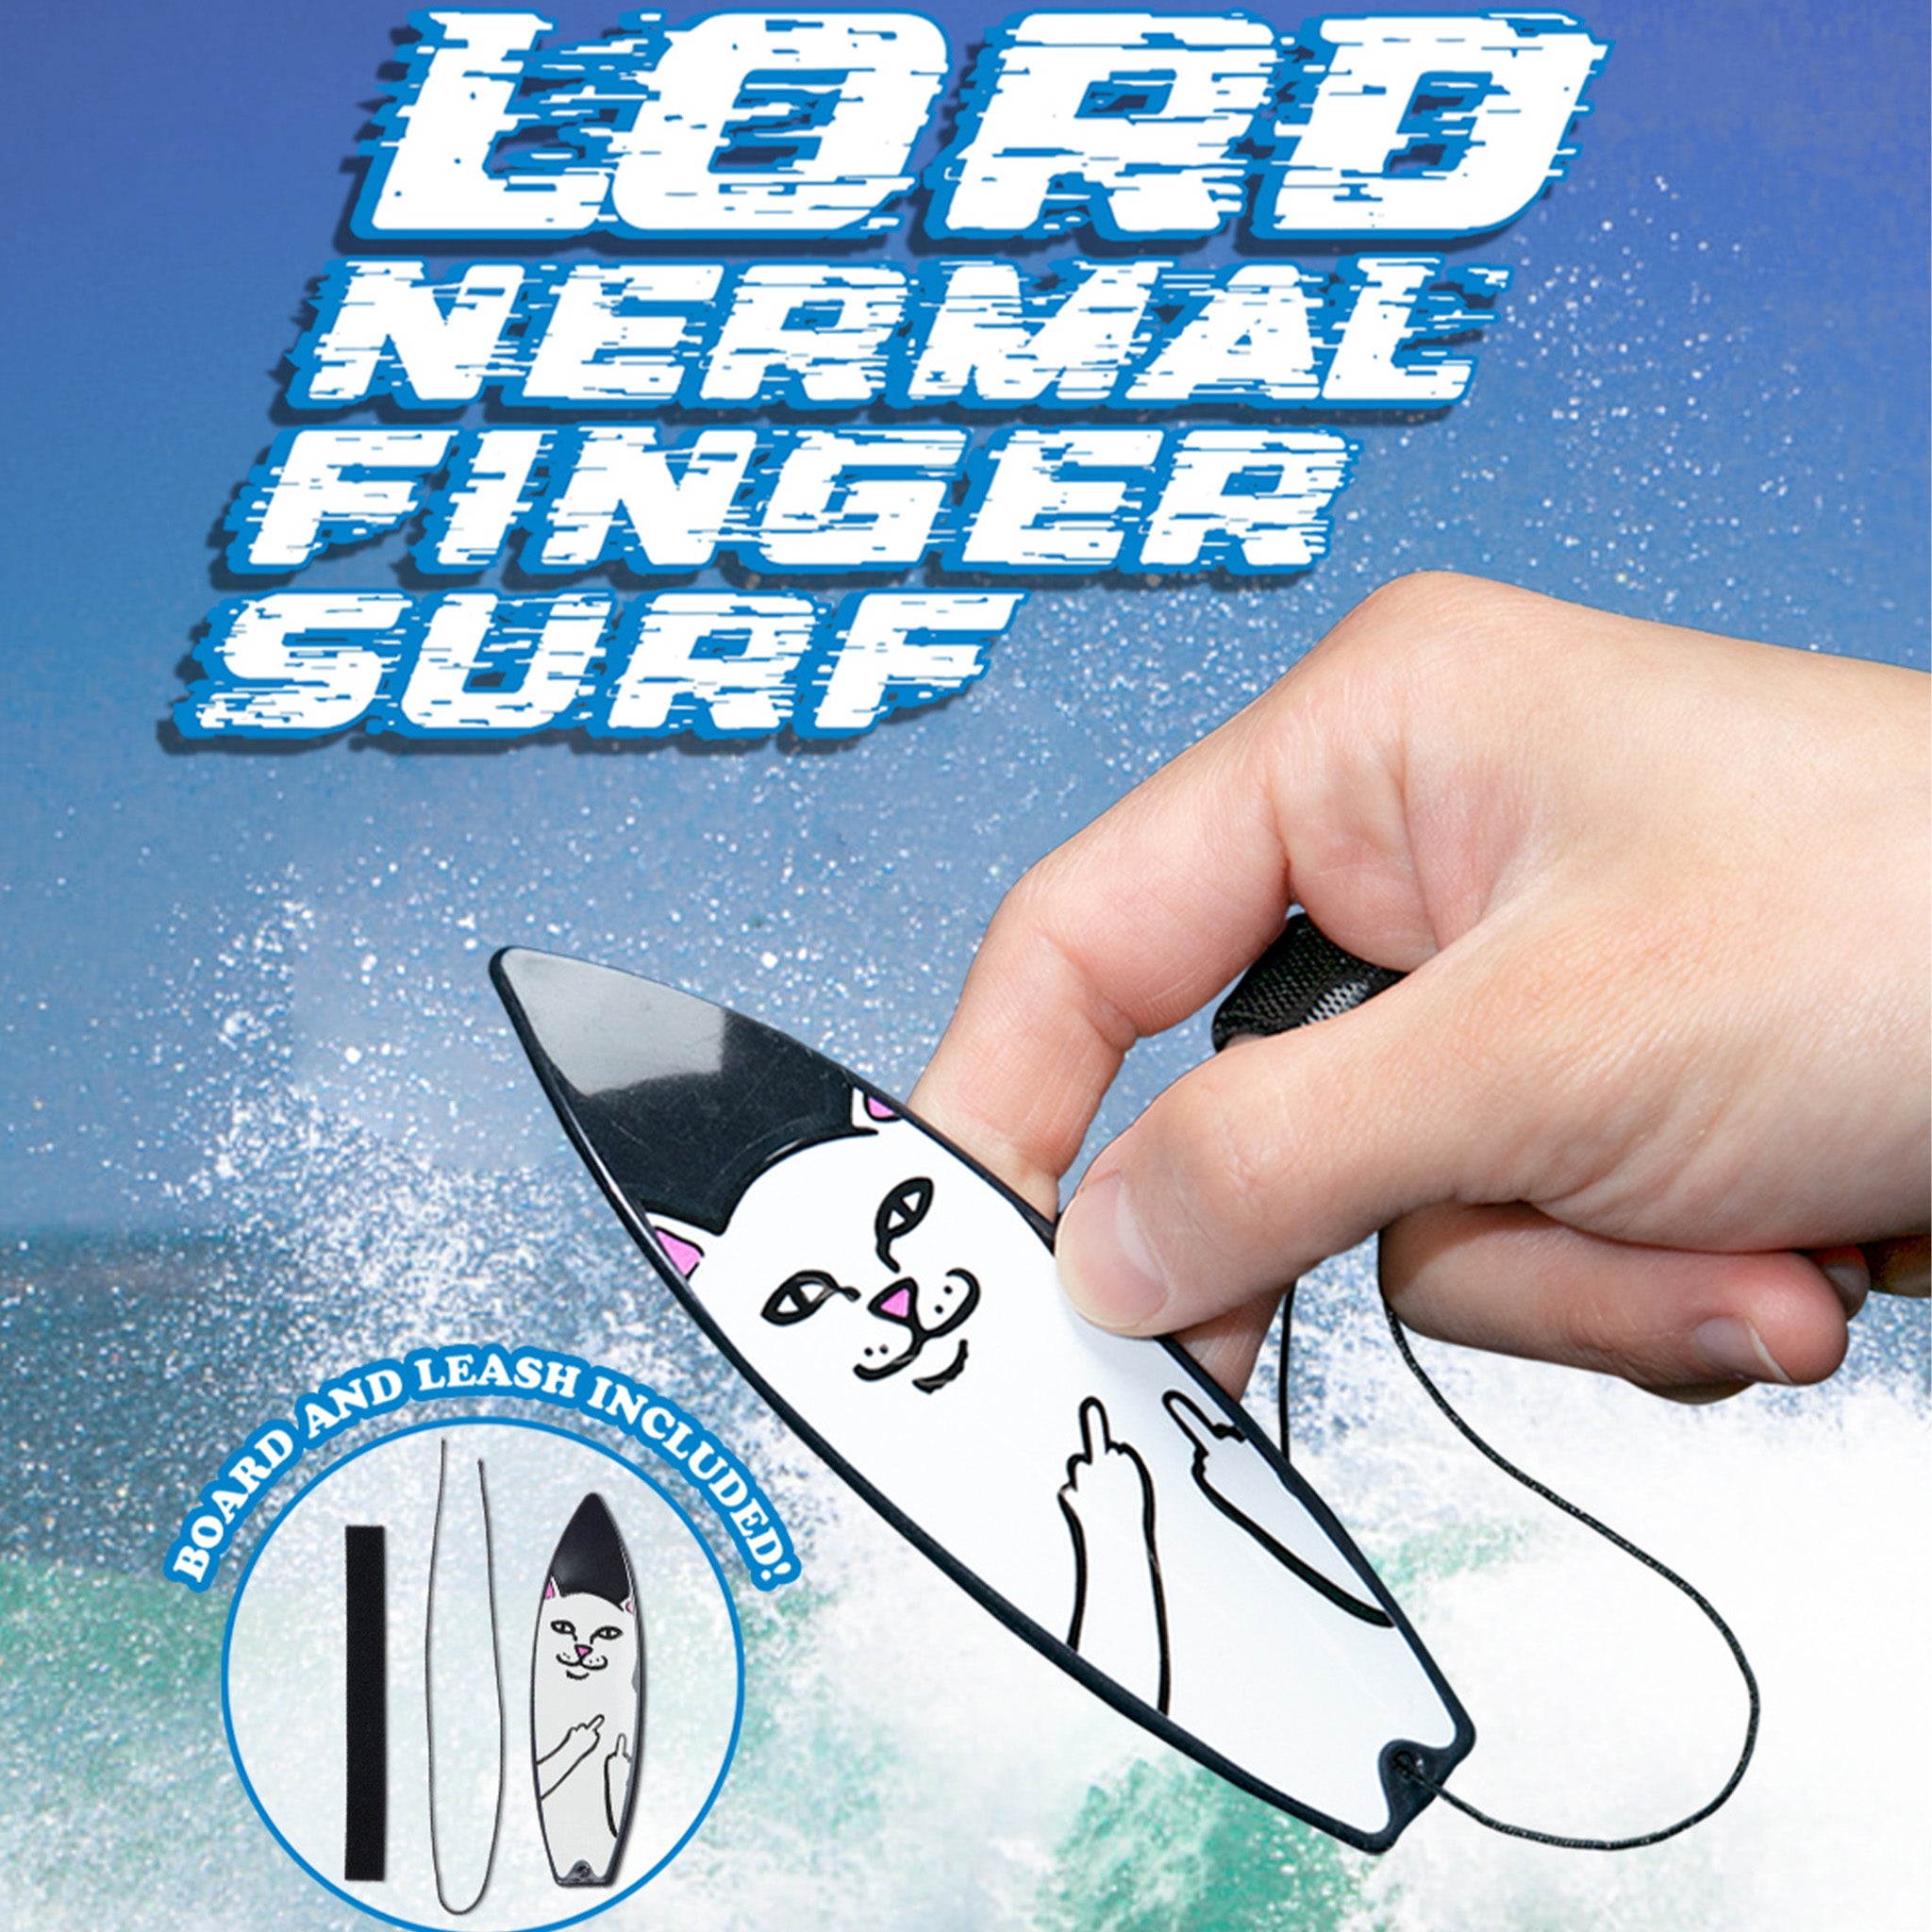 Lord Nermal Finger Surfboard (Black)